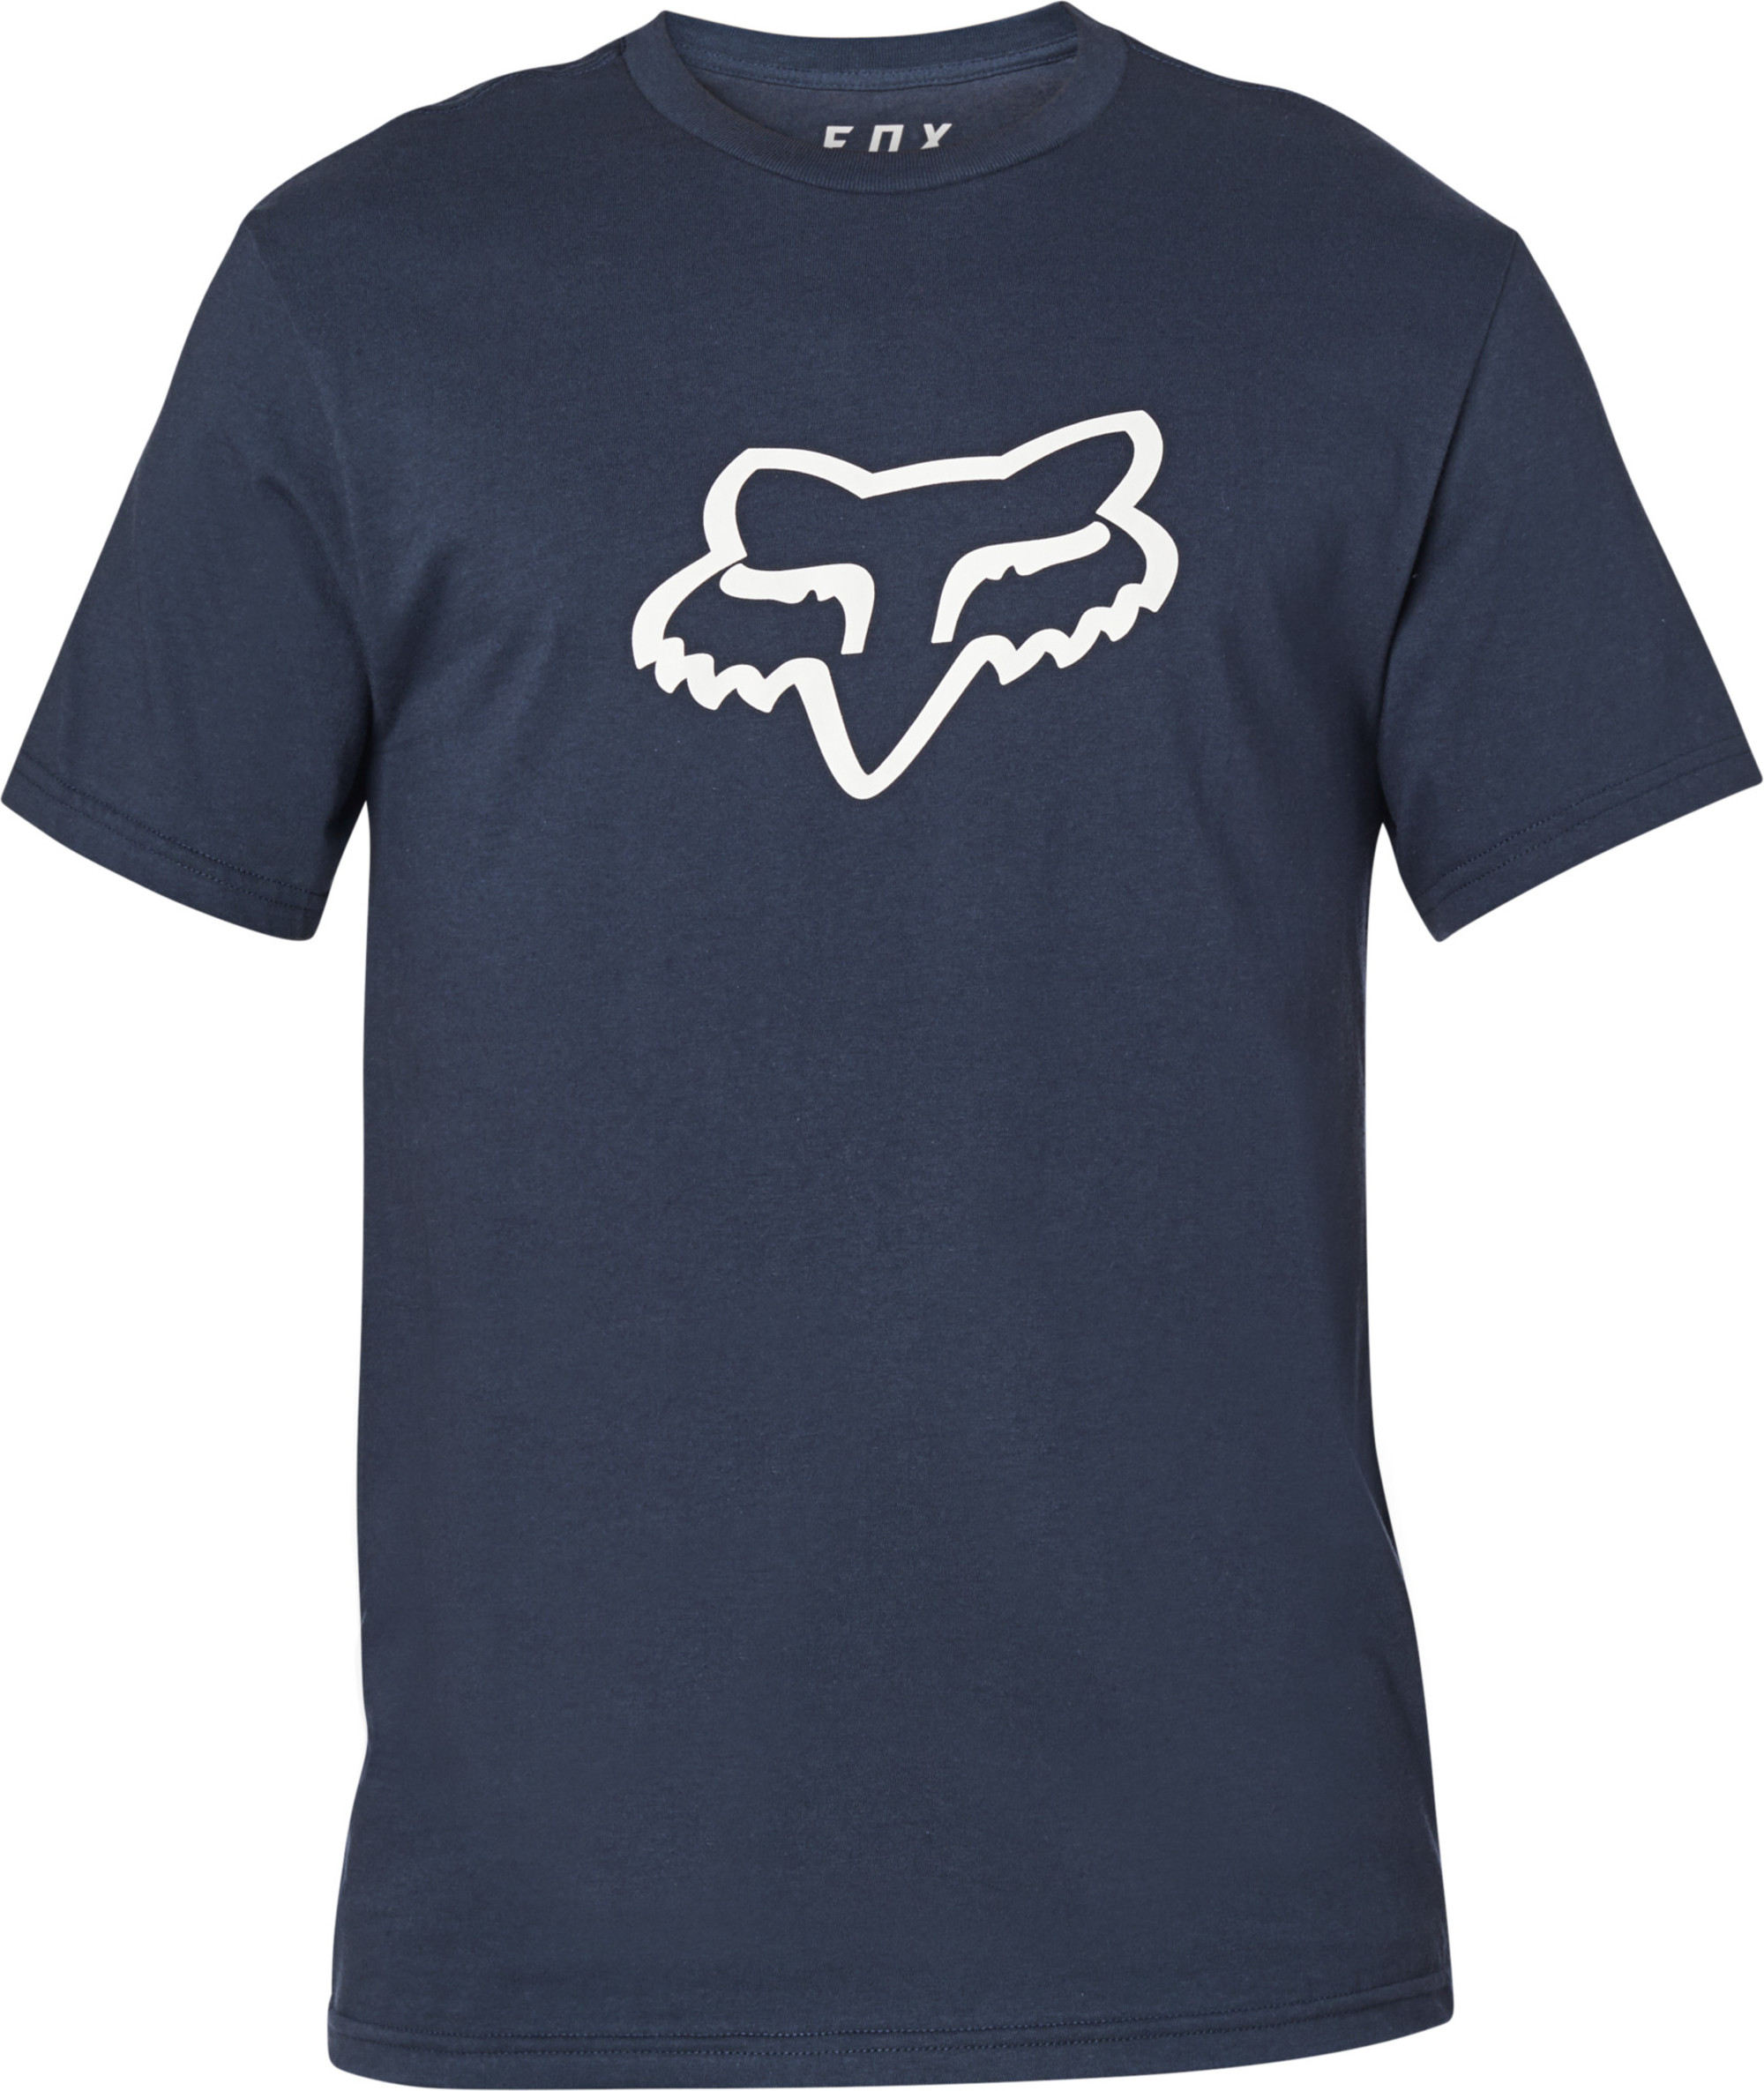 fox racing t-shirt shirts for men legacy head 34 xl